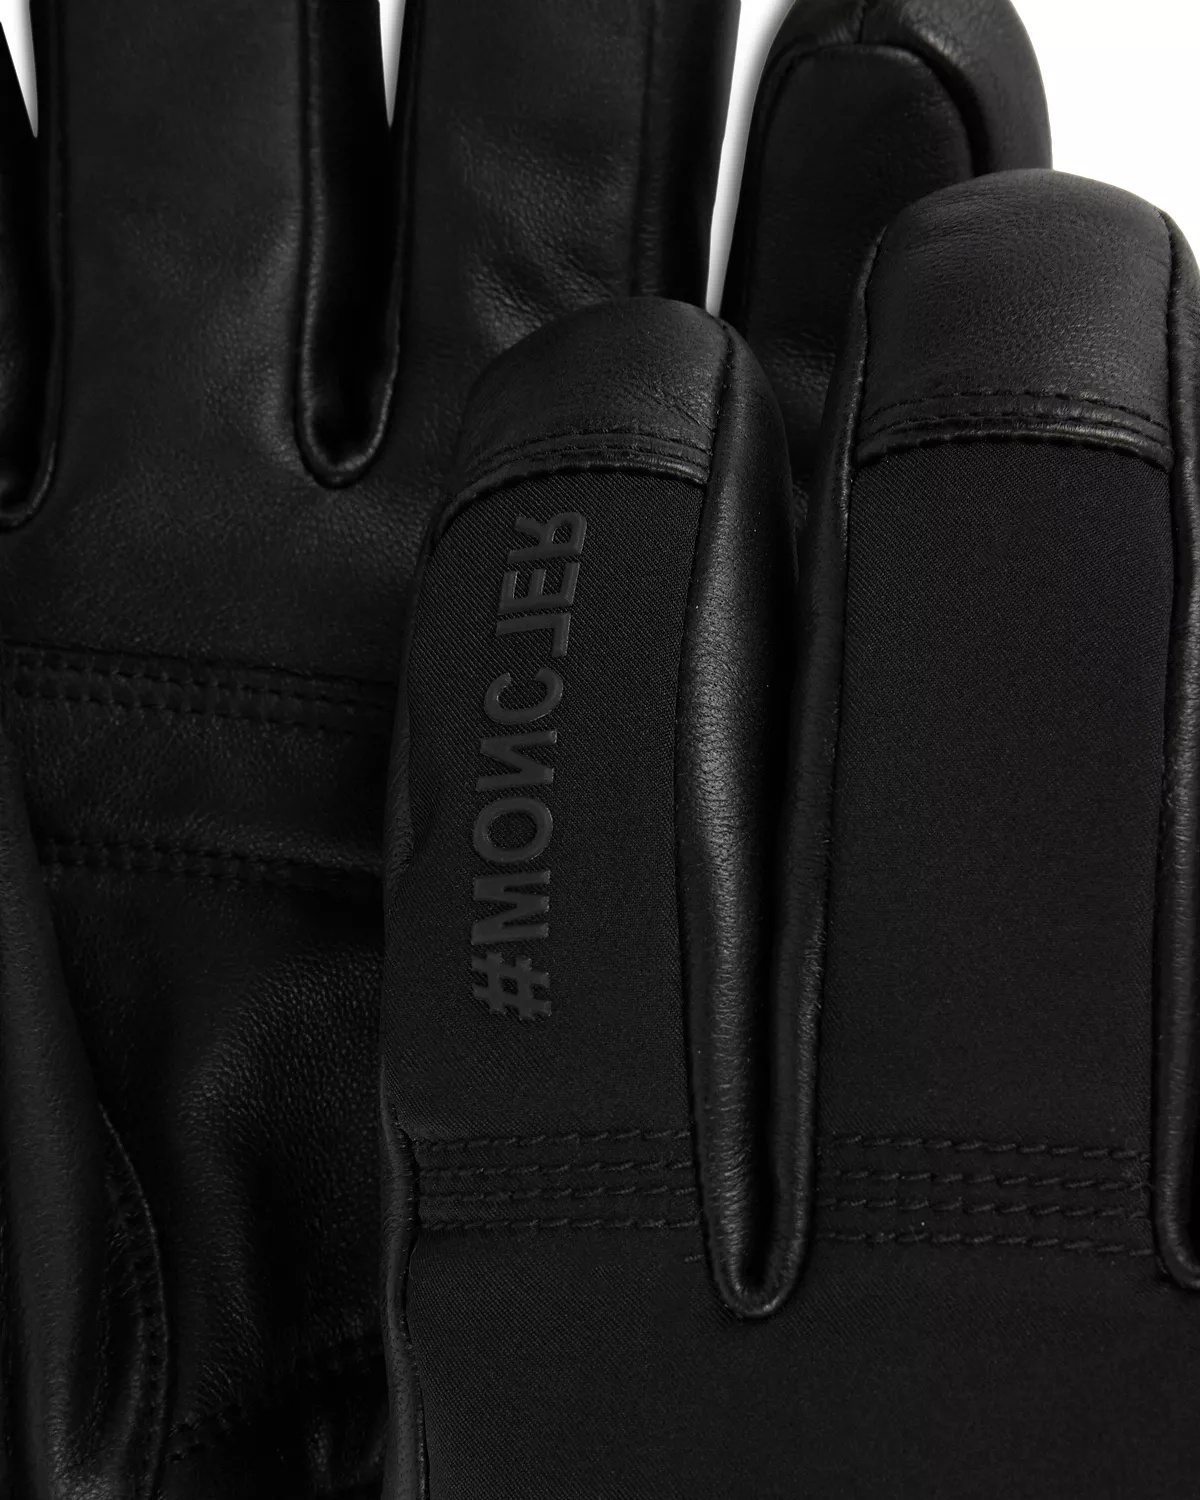 Heat Pocket Gloves - 3